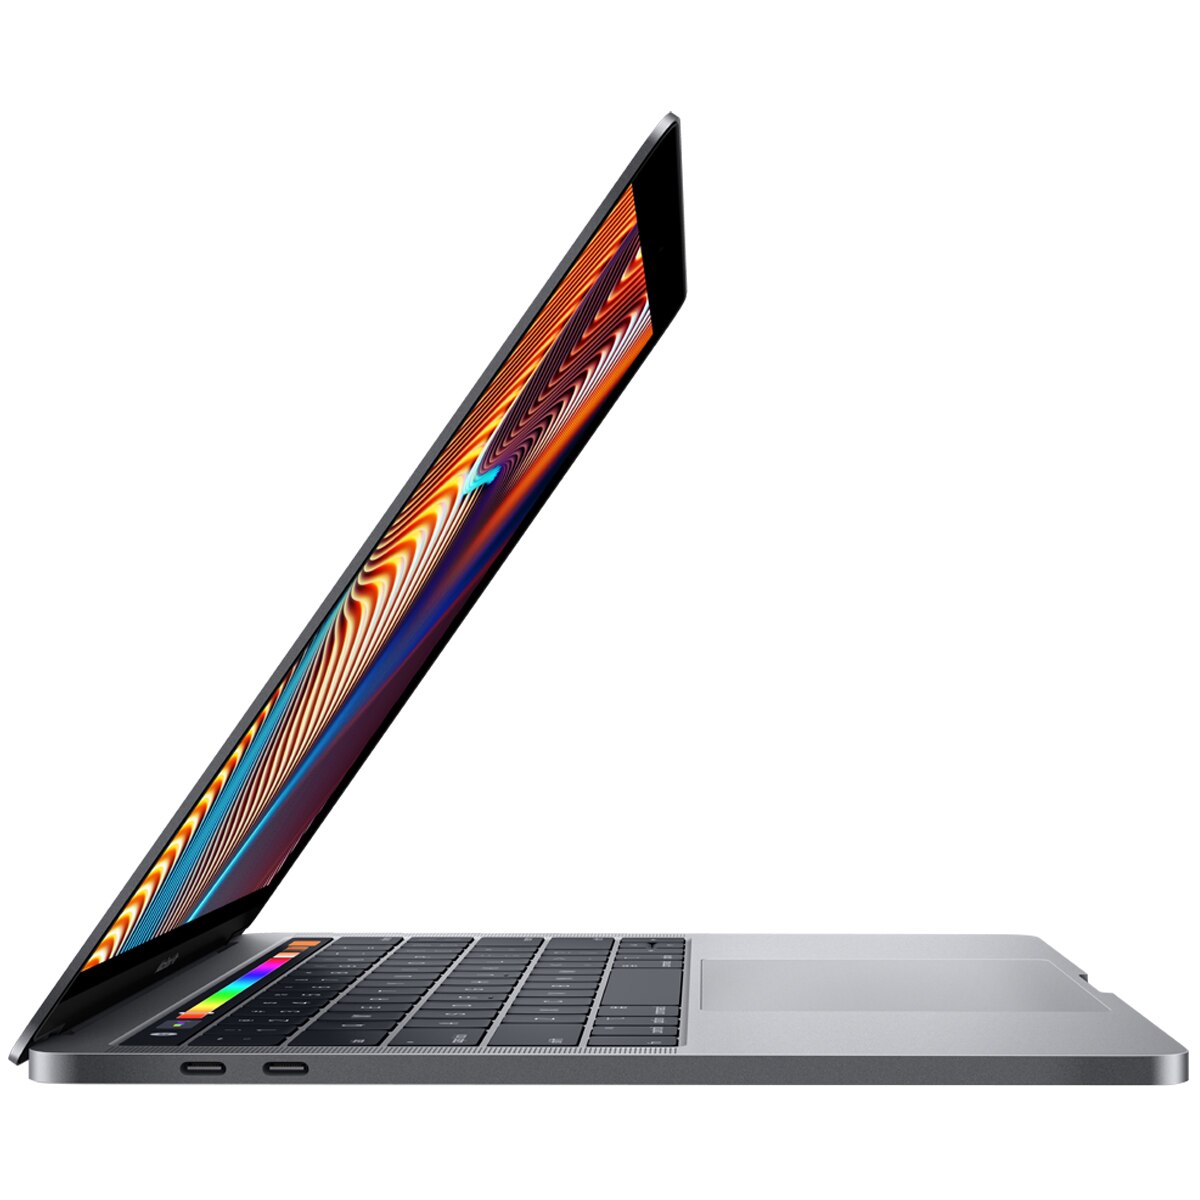 Macbook Pro MV962X/A 13-inch MacBook Pro with Touch Bar: 2.4GHz quad-core 8th-generation Intel Core i5 processor, 256GB - Space Grey